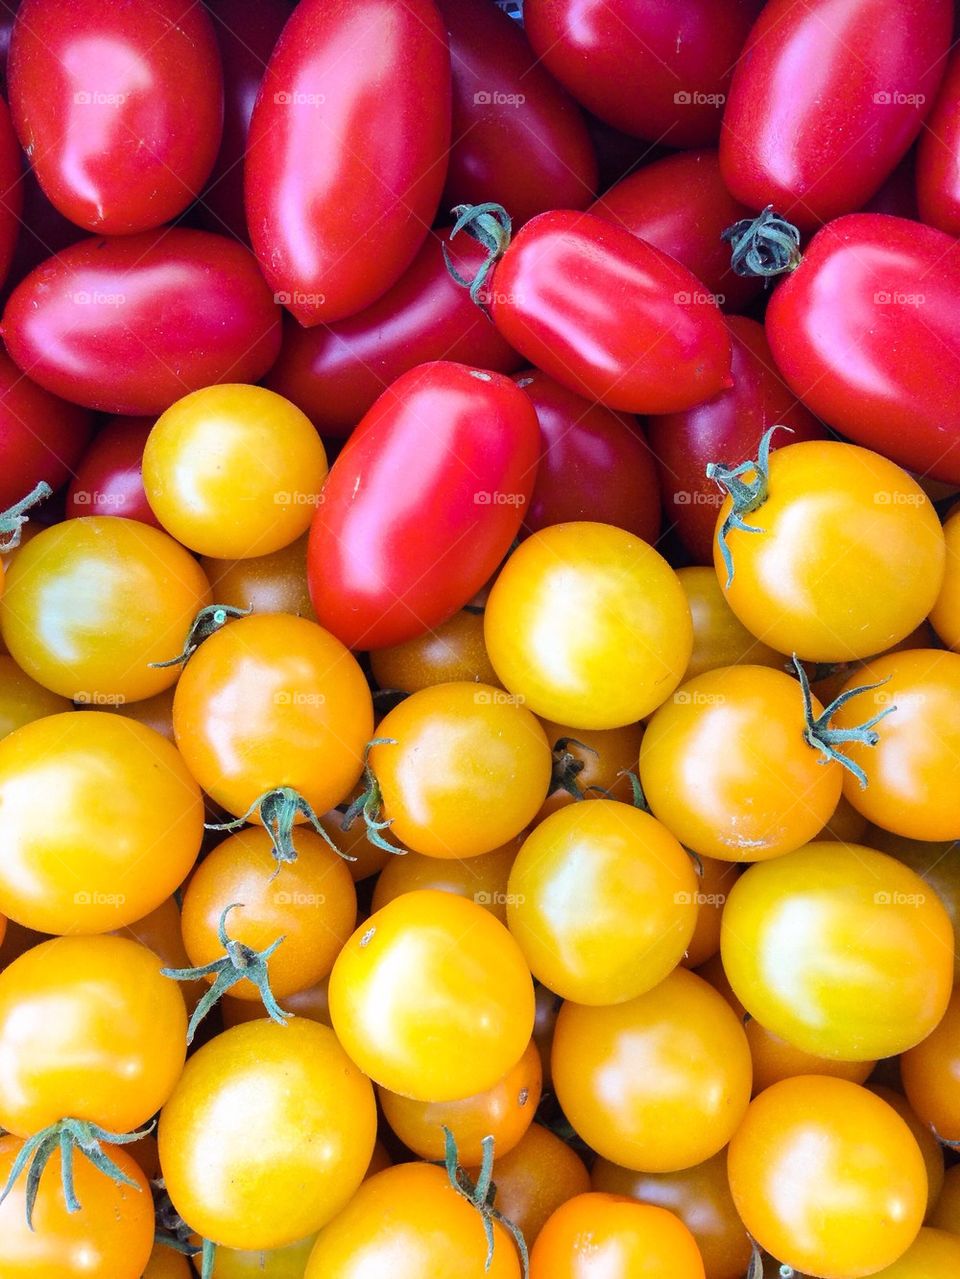 Varieties of cherry tomatoes